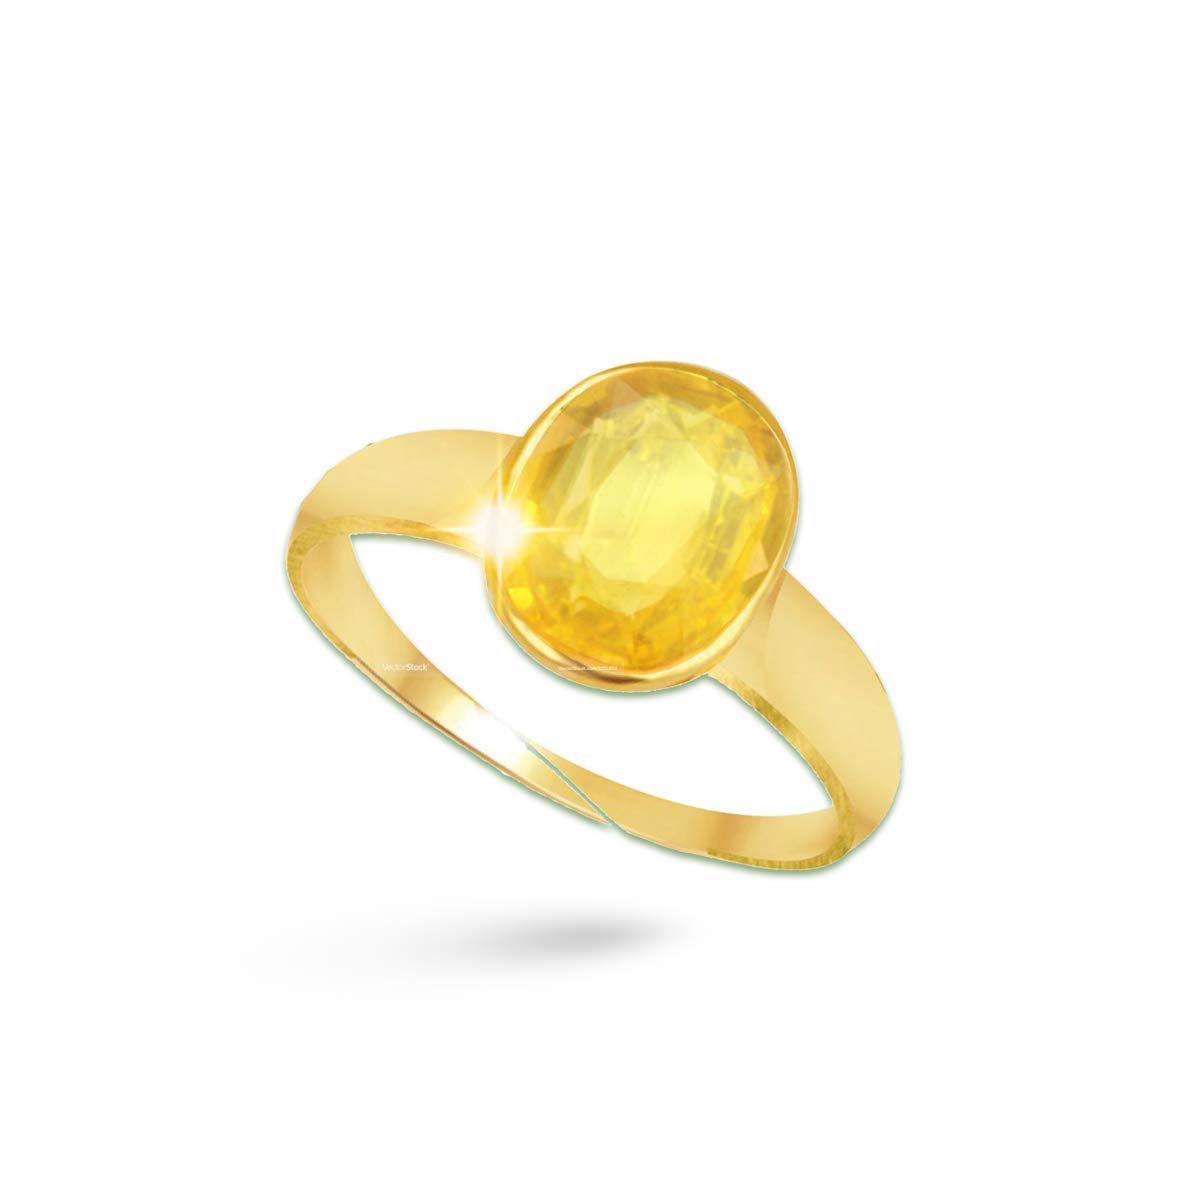 Yellow Sapphire (Pukhraj) Ring Design For Men and Women - YouTube-atpcosmetics.com.vn